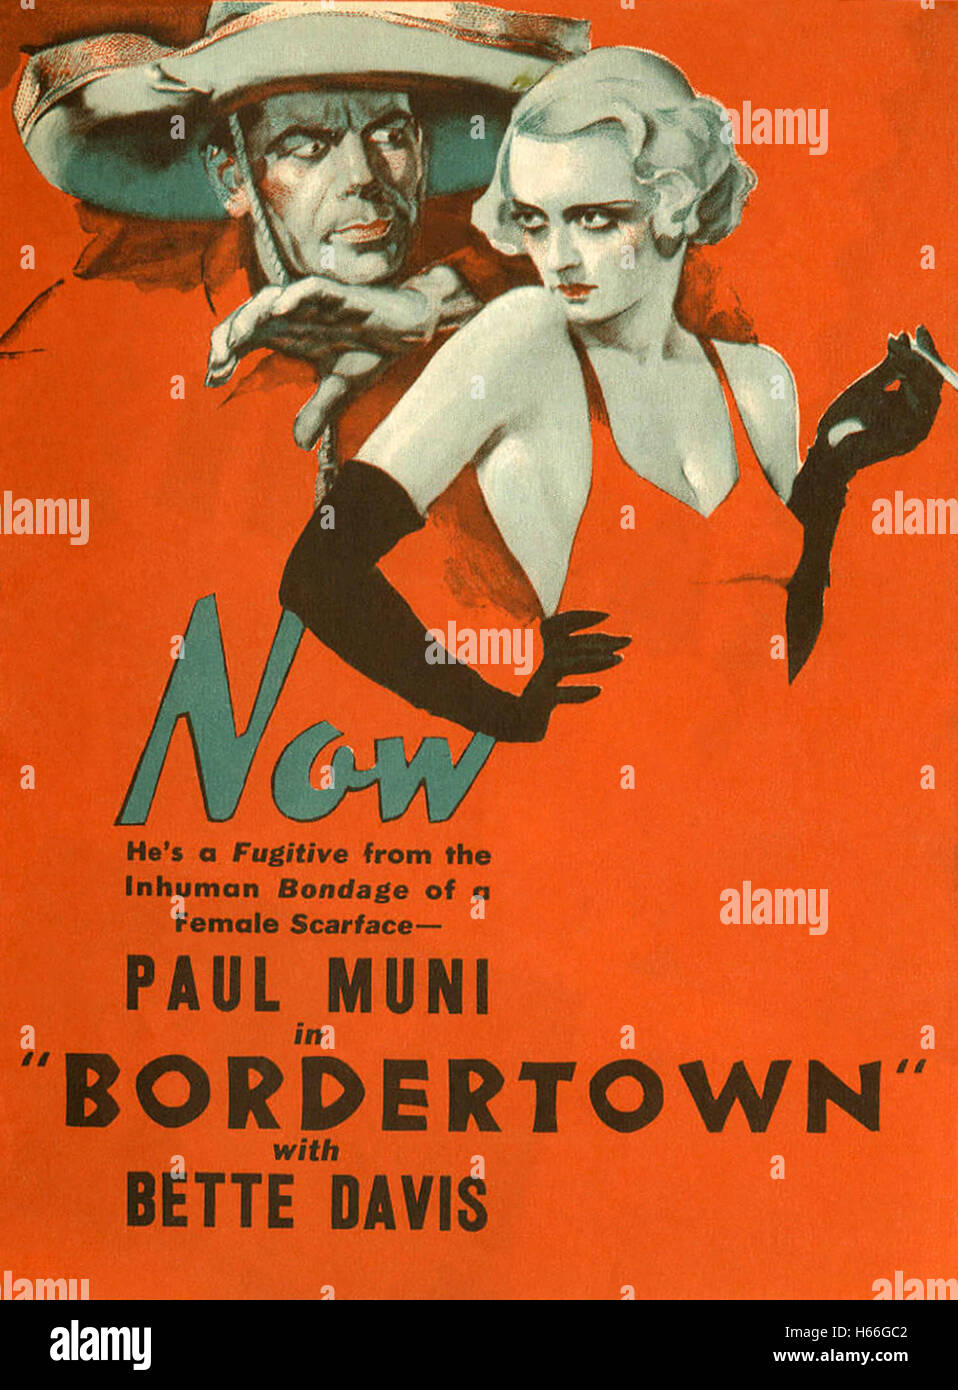 Bordertown - Movie Poster Stock Photo - Alamy